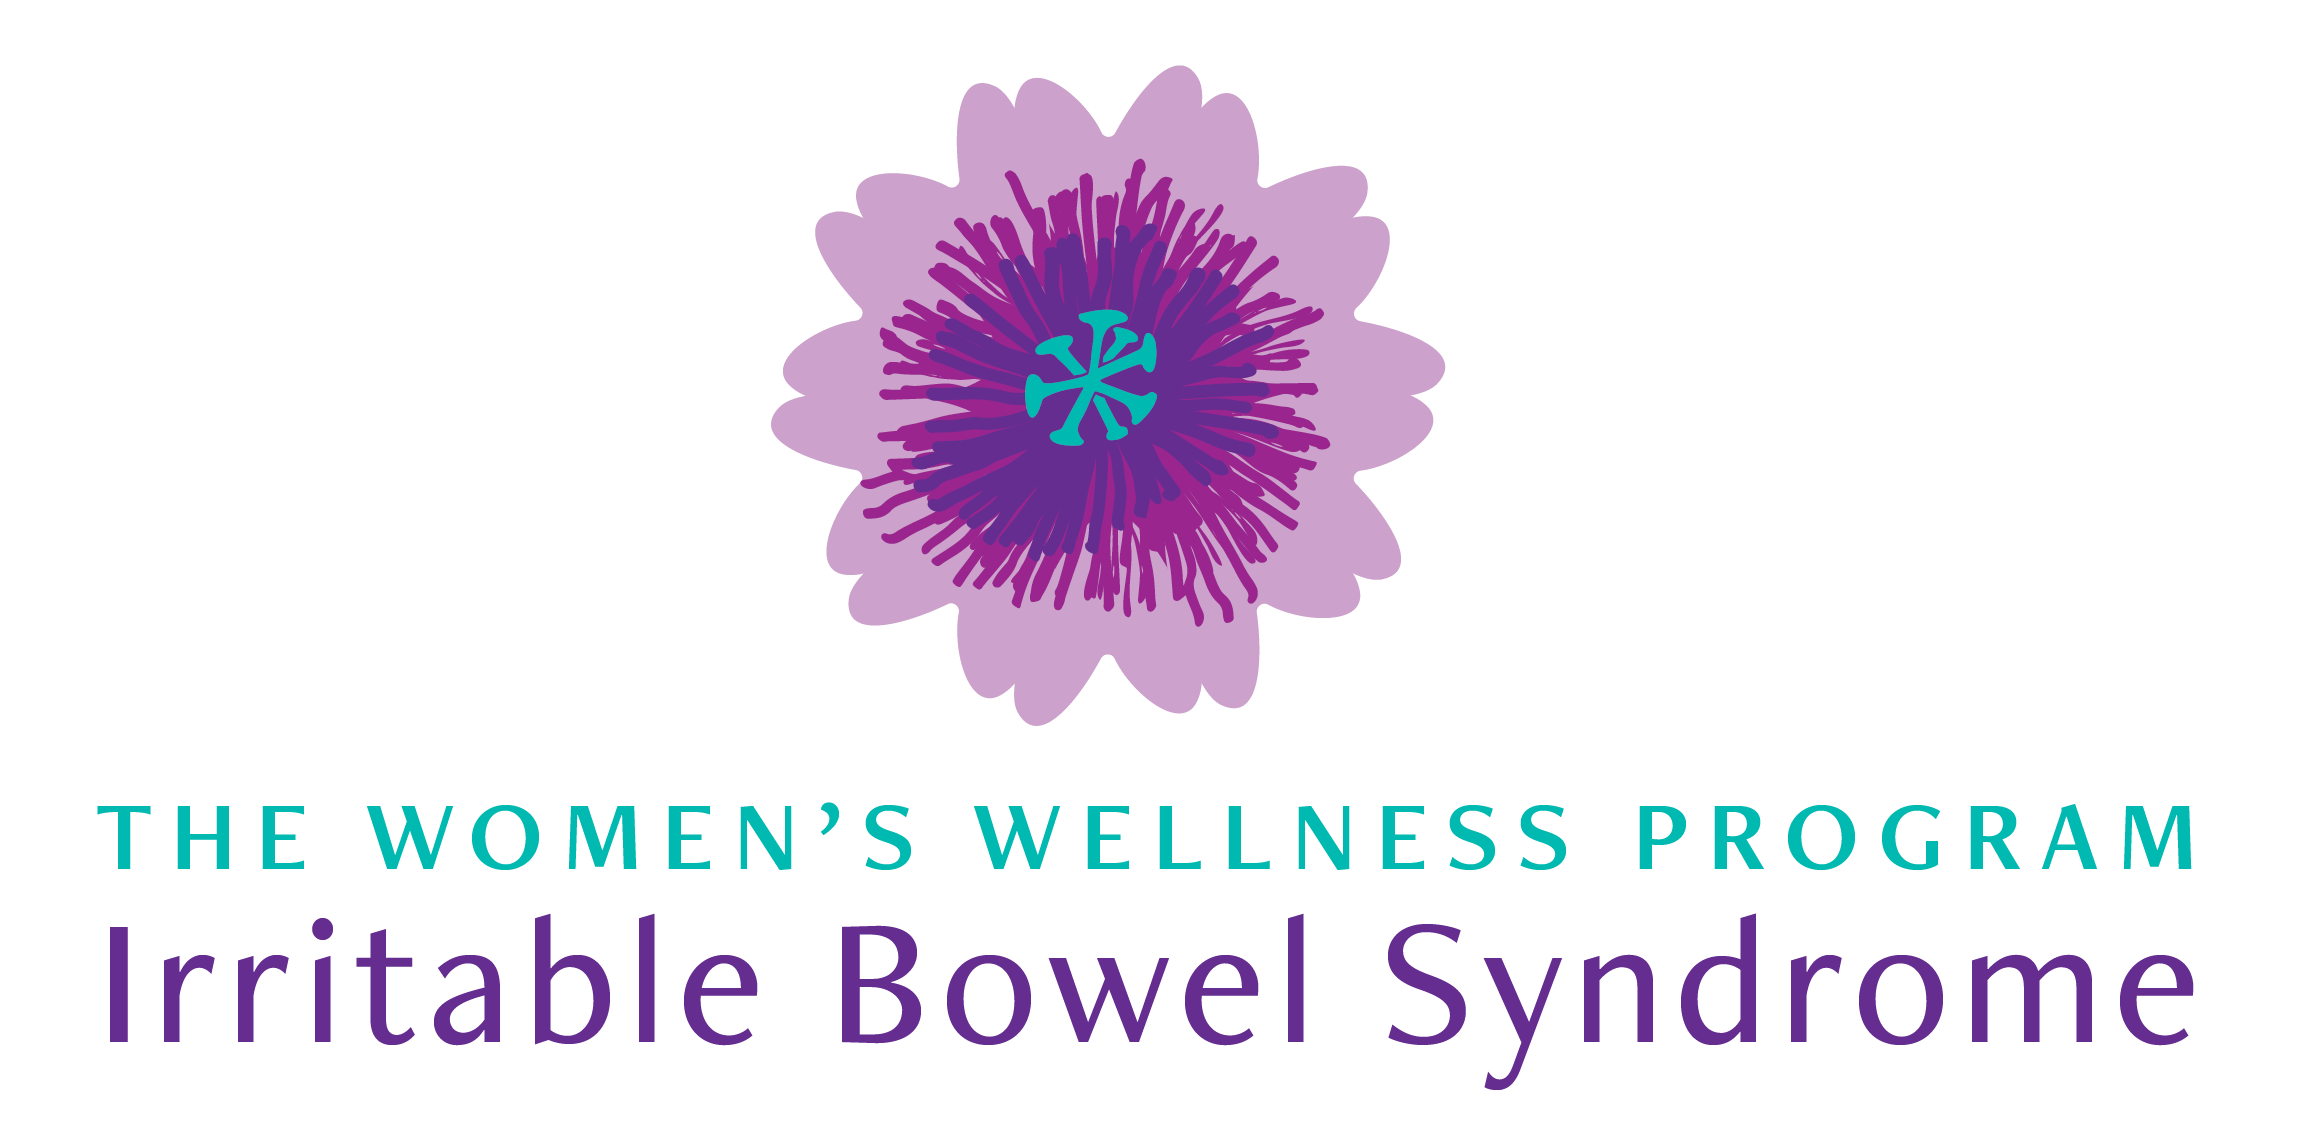 The Women’s Wellness program for Irritable Bowel Syndrome (IBS)